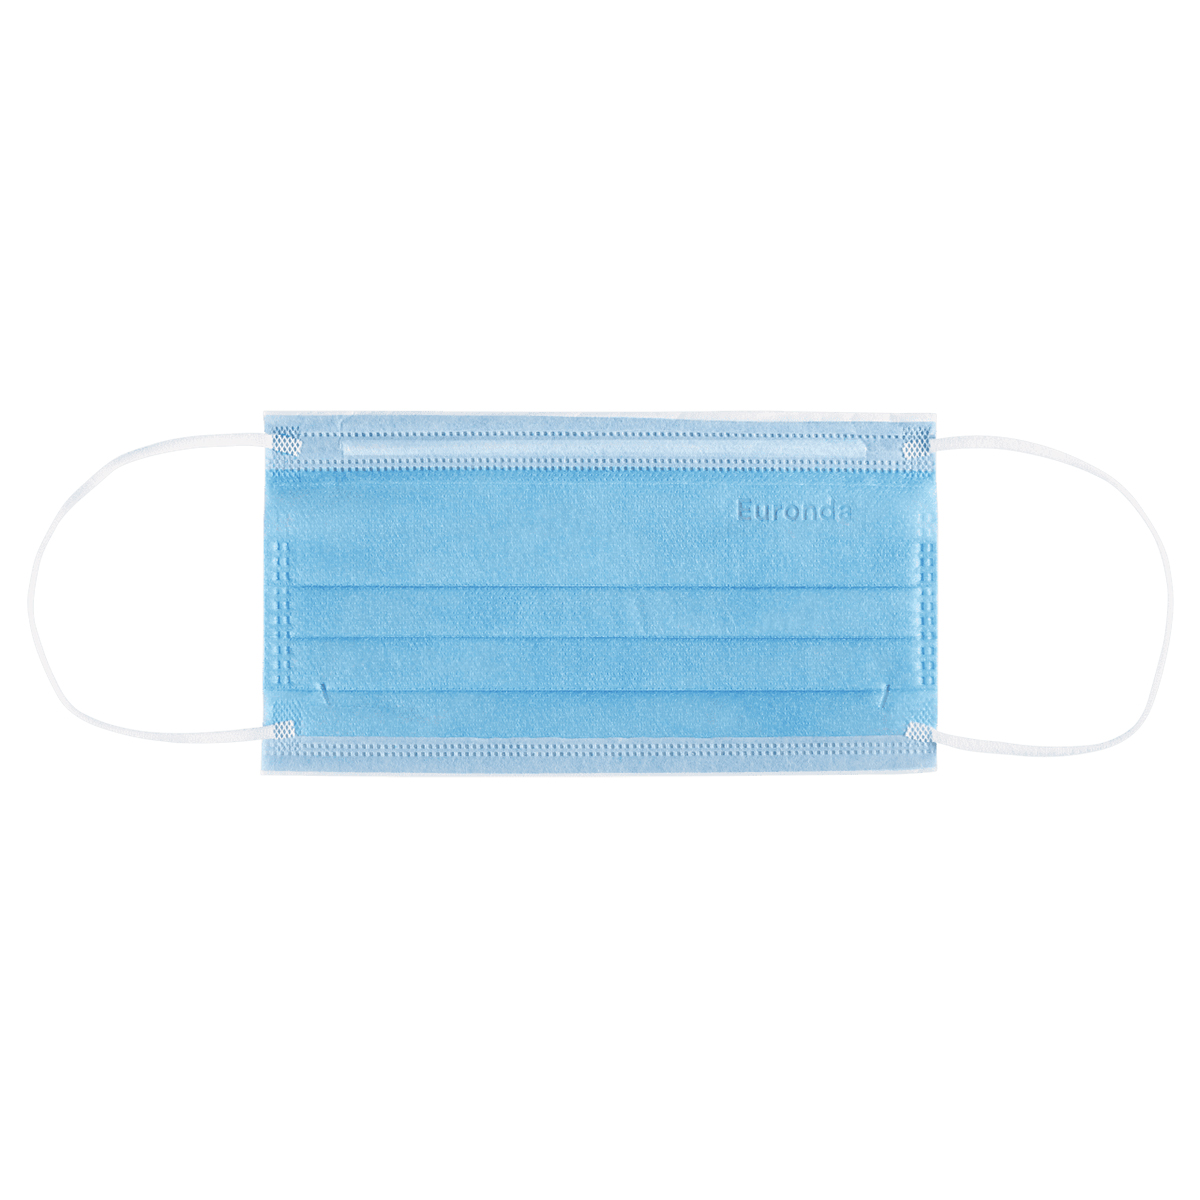 Monoart Protection 4 Perfect Fit Farbe: hellblau (Euronda)